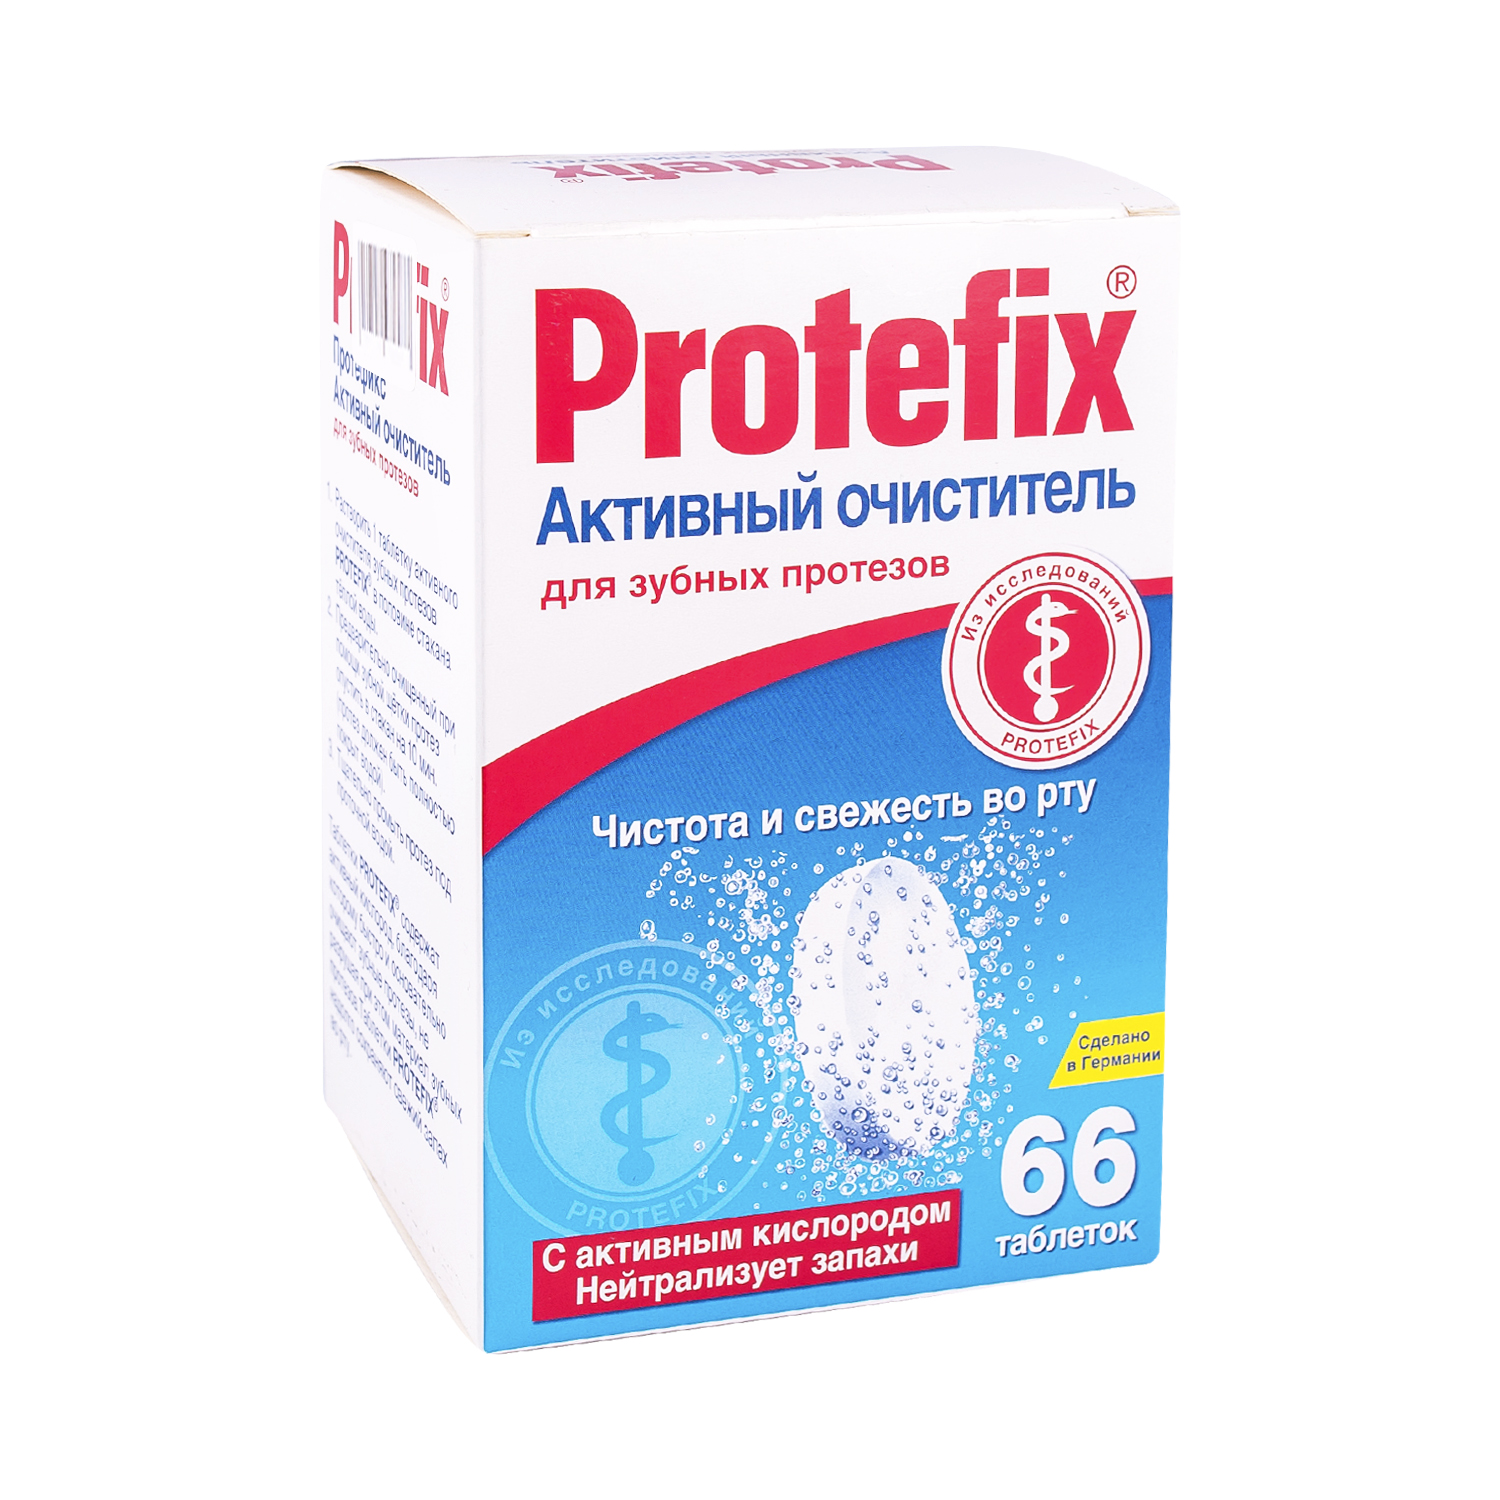 Купить Протефикс средство для очистки зубн.протезов таб. №66, Queisser Pharma